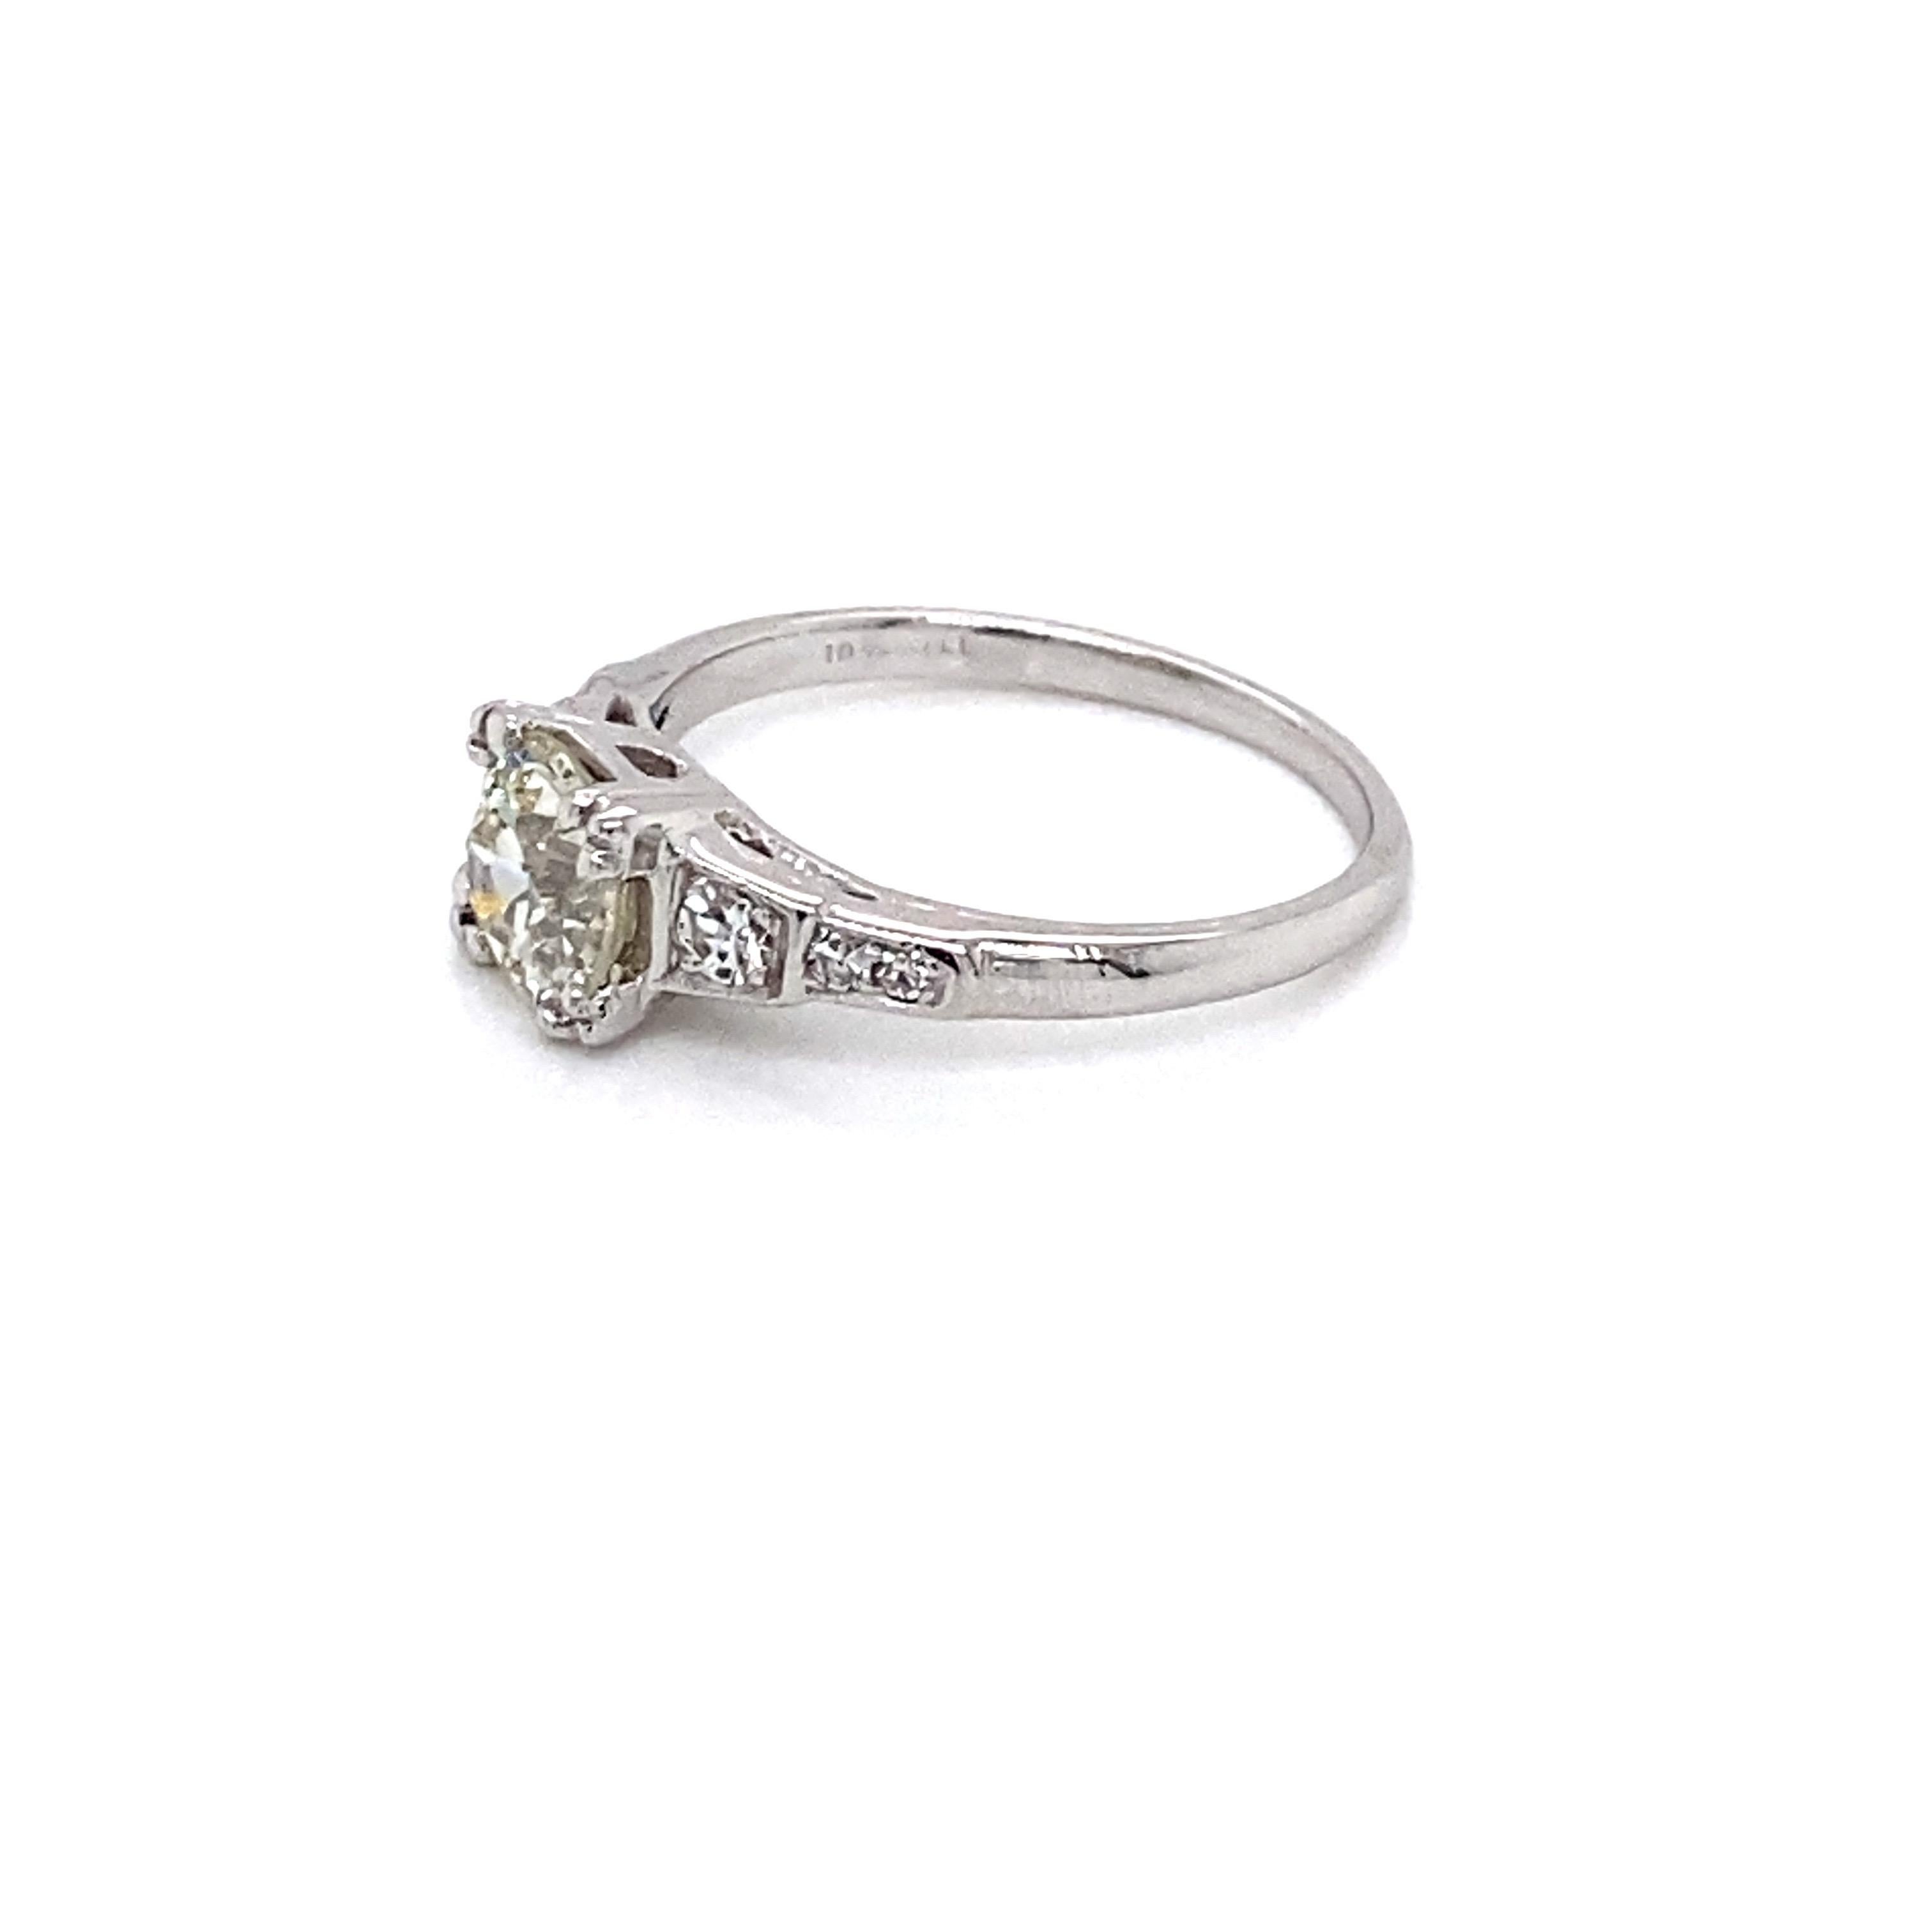 Vintage 1930s Art Deco 1.16 Carat European Cut Diamond Platinum Ring In Good Condition For Sale In Boston, MA